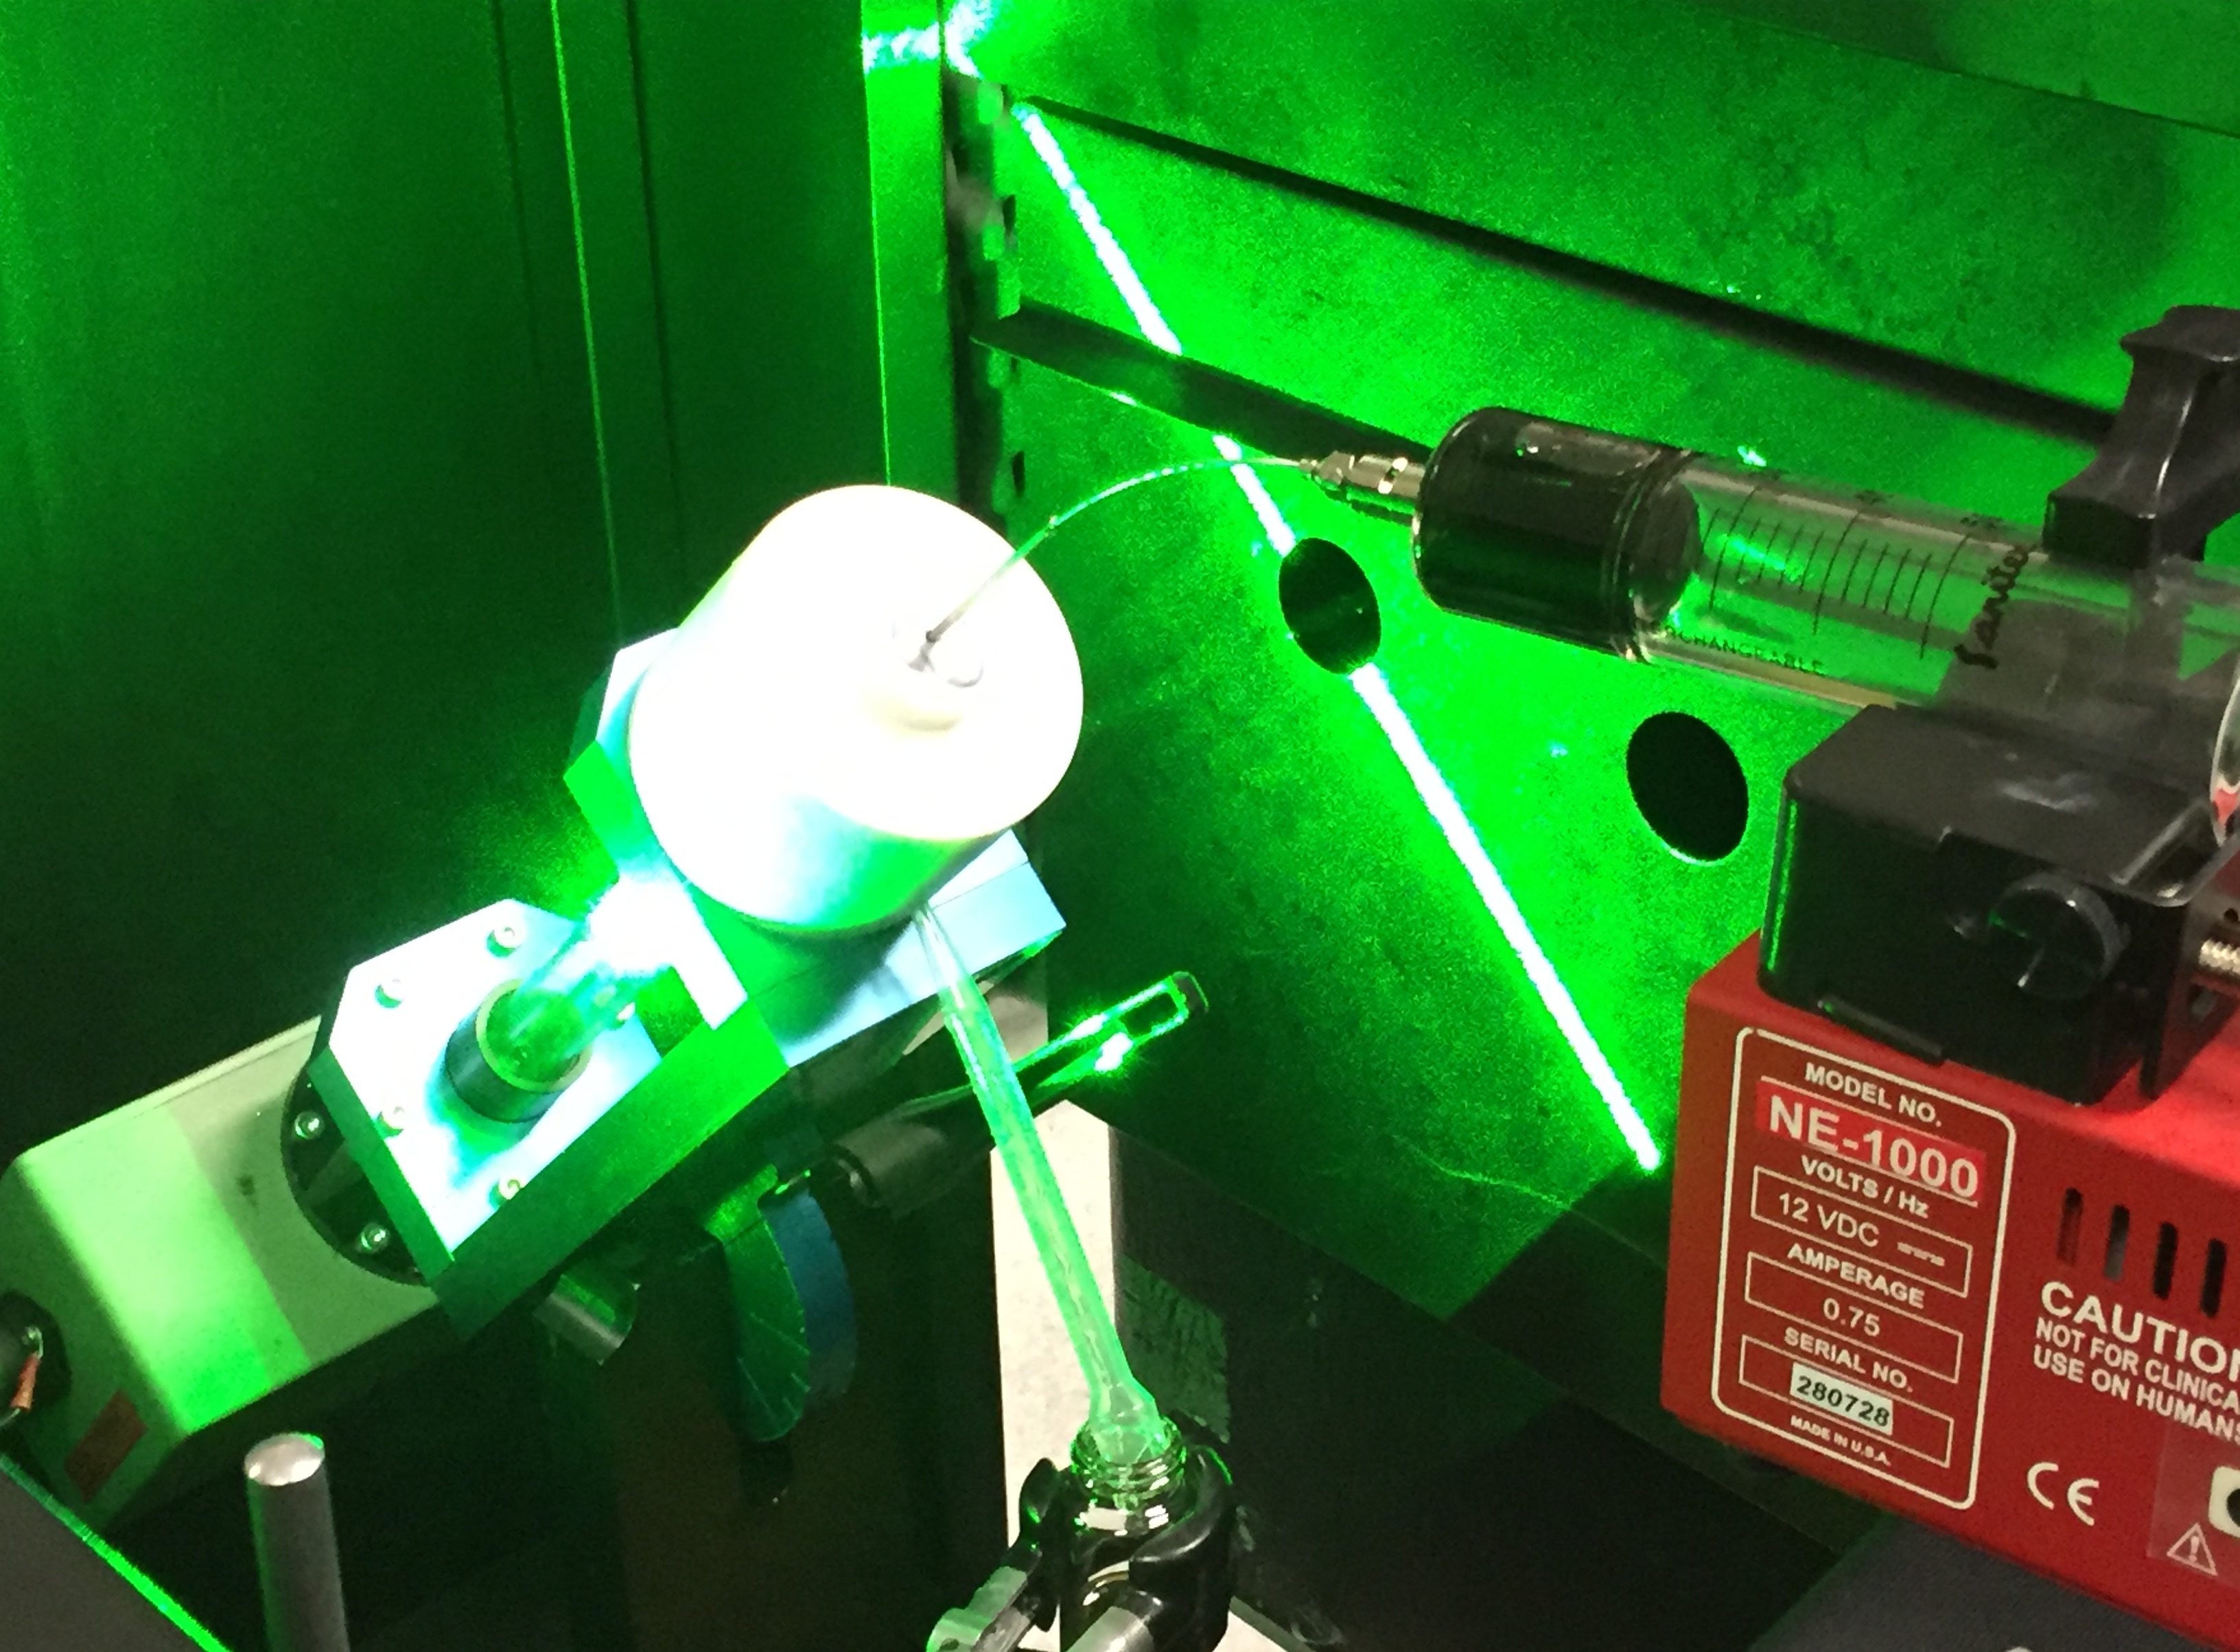 Green laser light reflecting off a Vortex Fluidic Device.